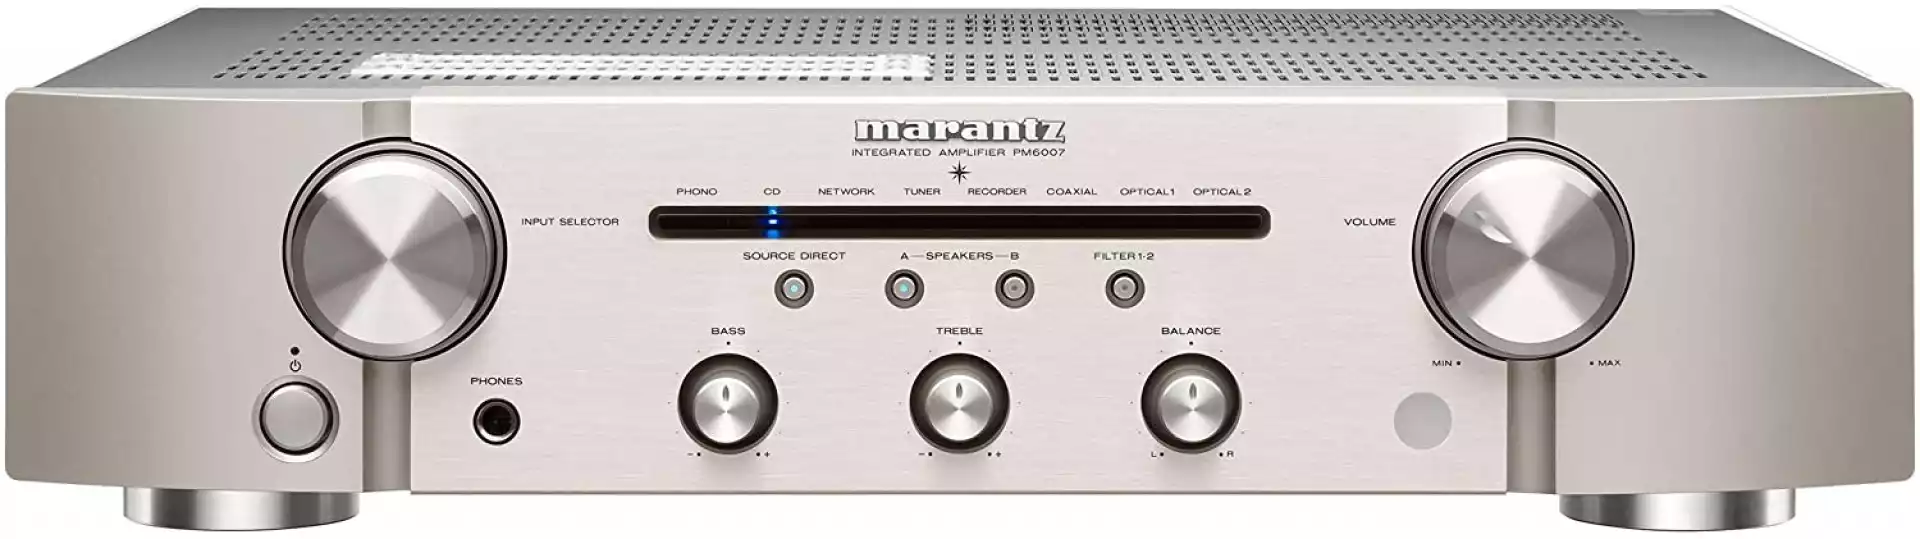 Marantz PM6007 integrated amplifier - Alpha Audio